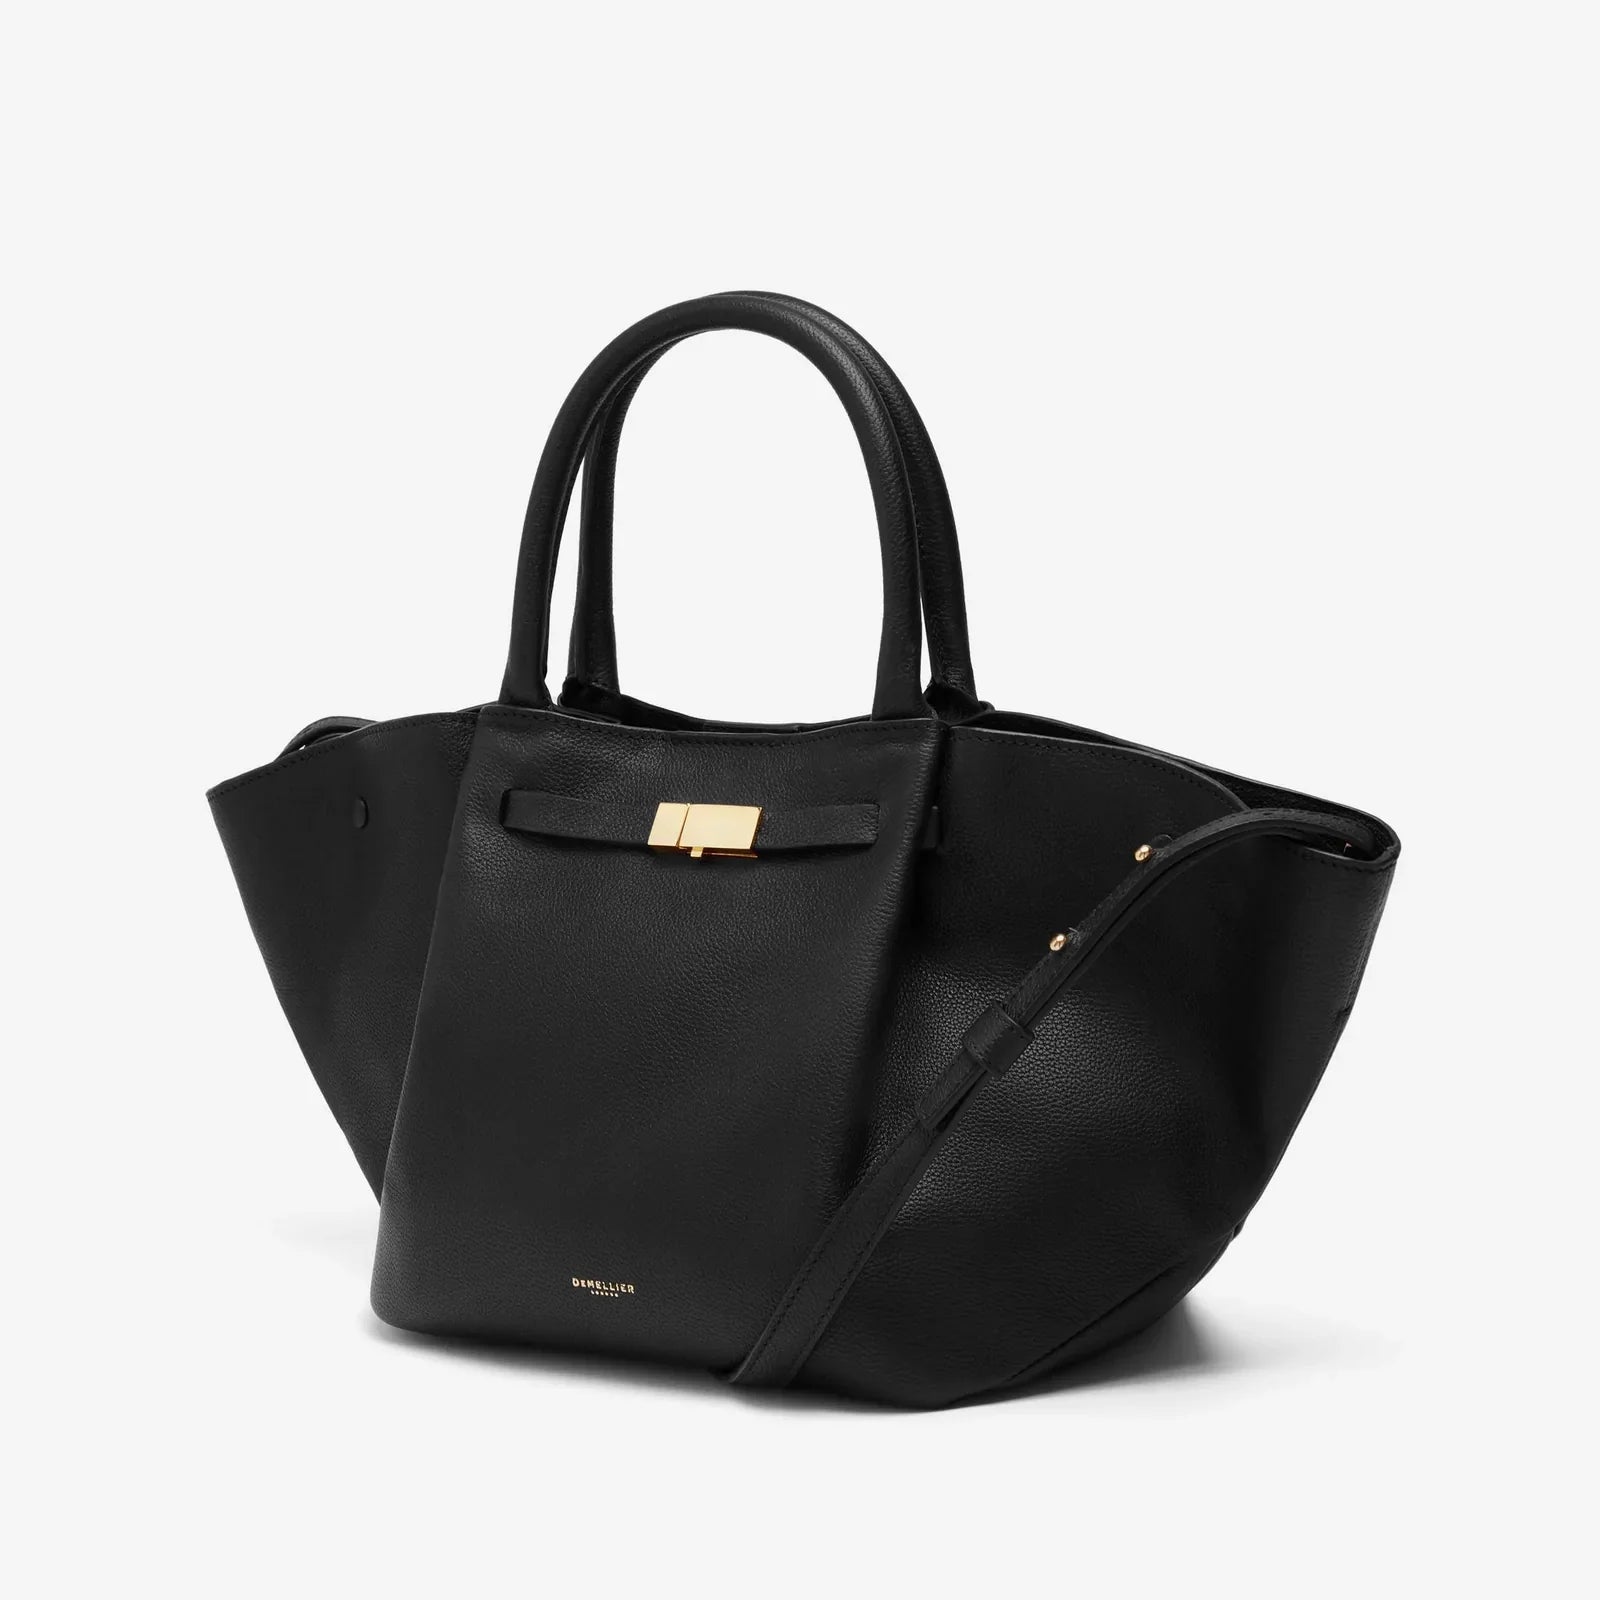 City Life USA handbag | Handbag, Black purses, Hard body